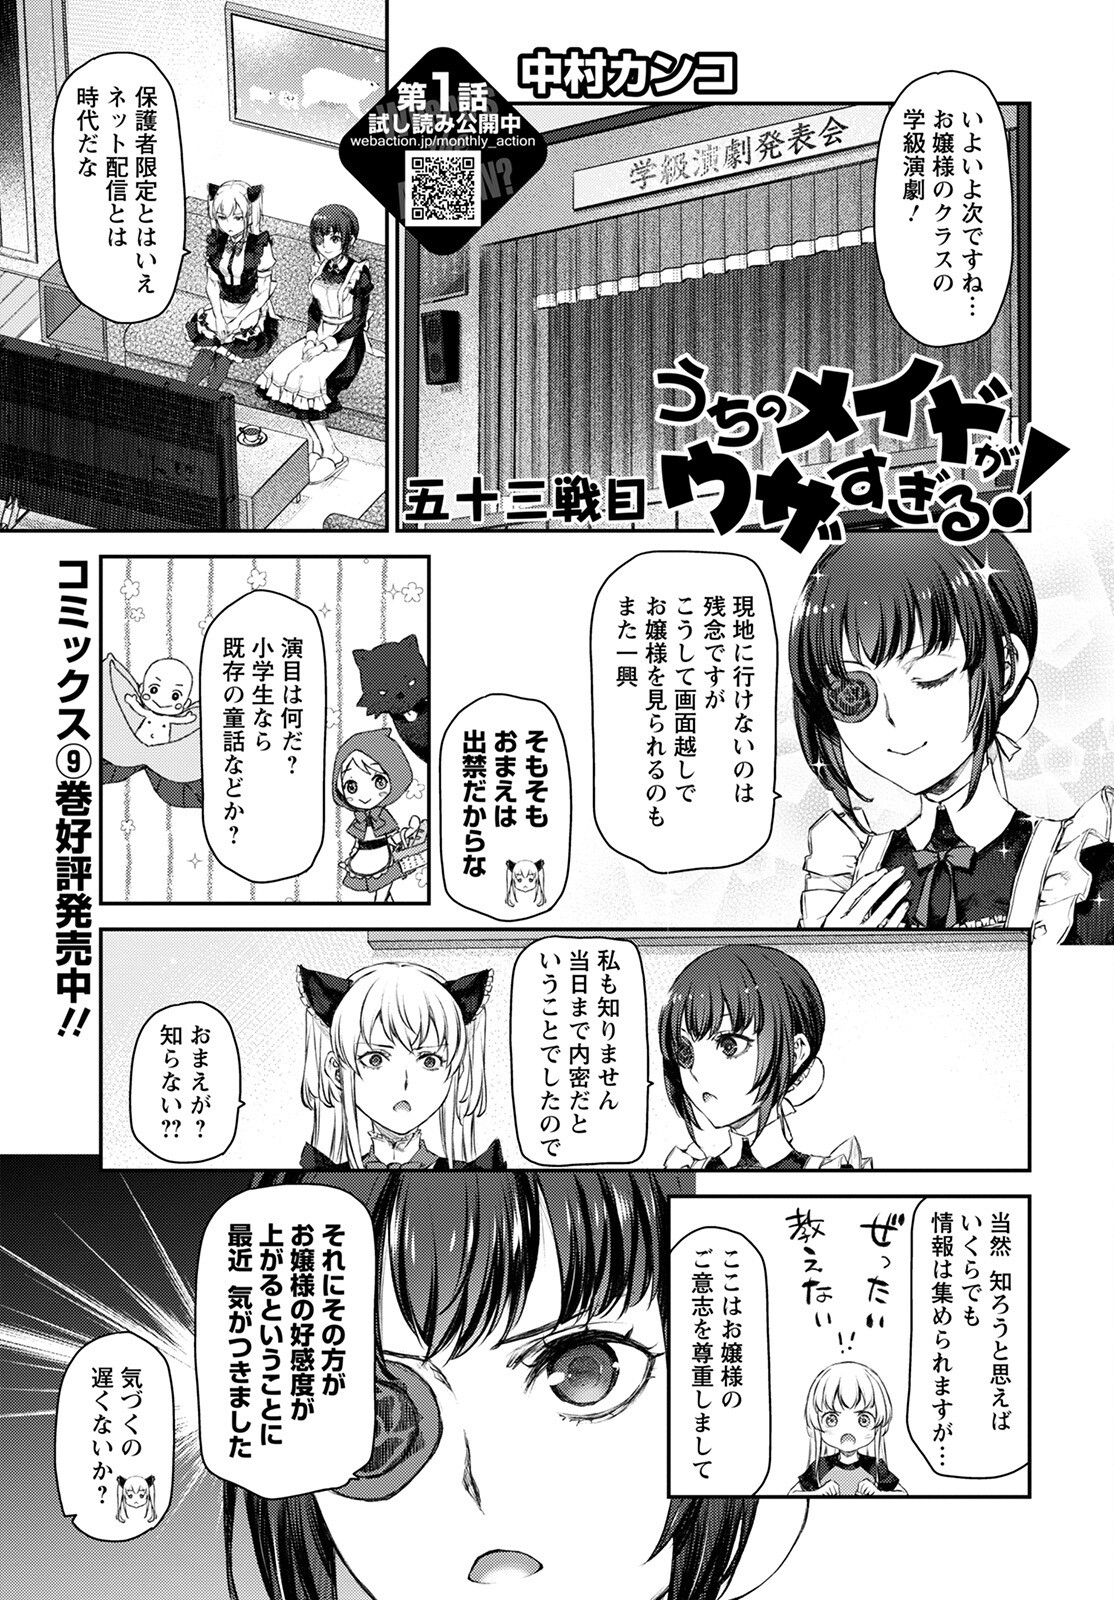 Uchi no Maid ga Uzasugiru! - Chapter 53 - Page 1